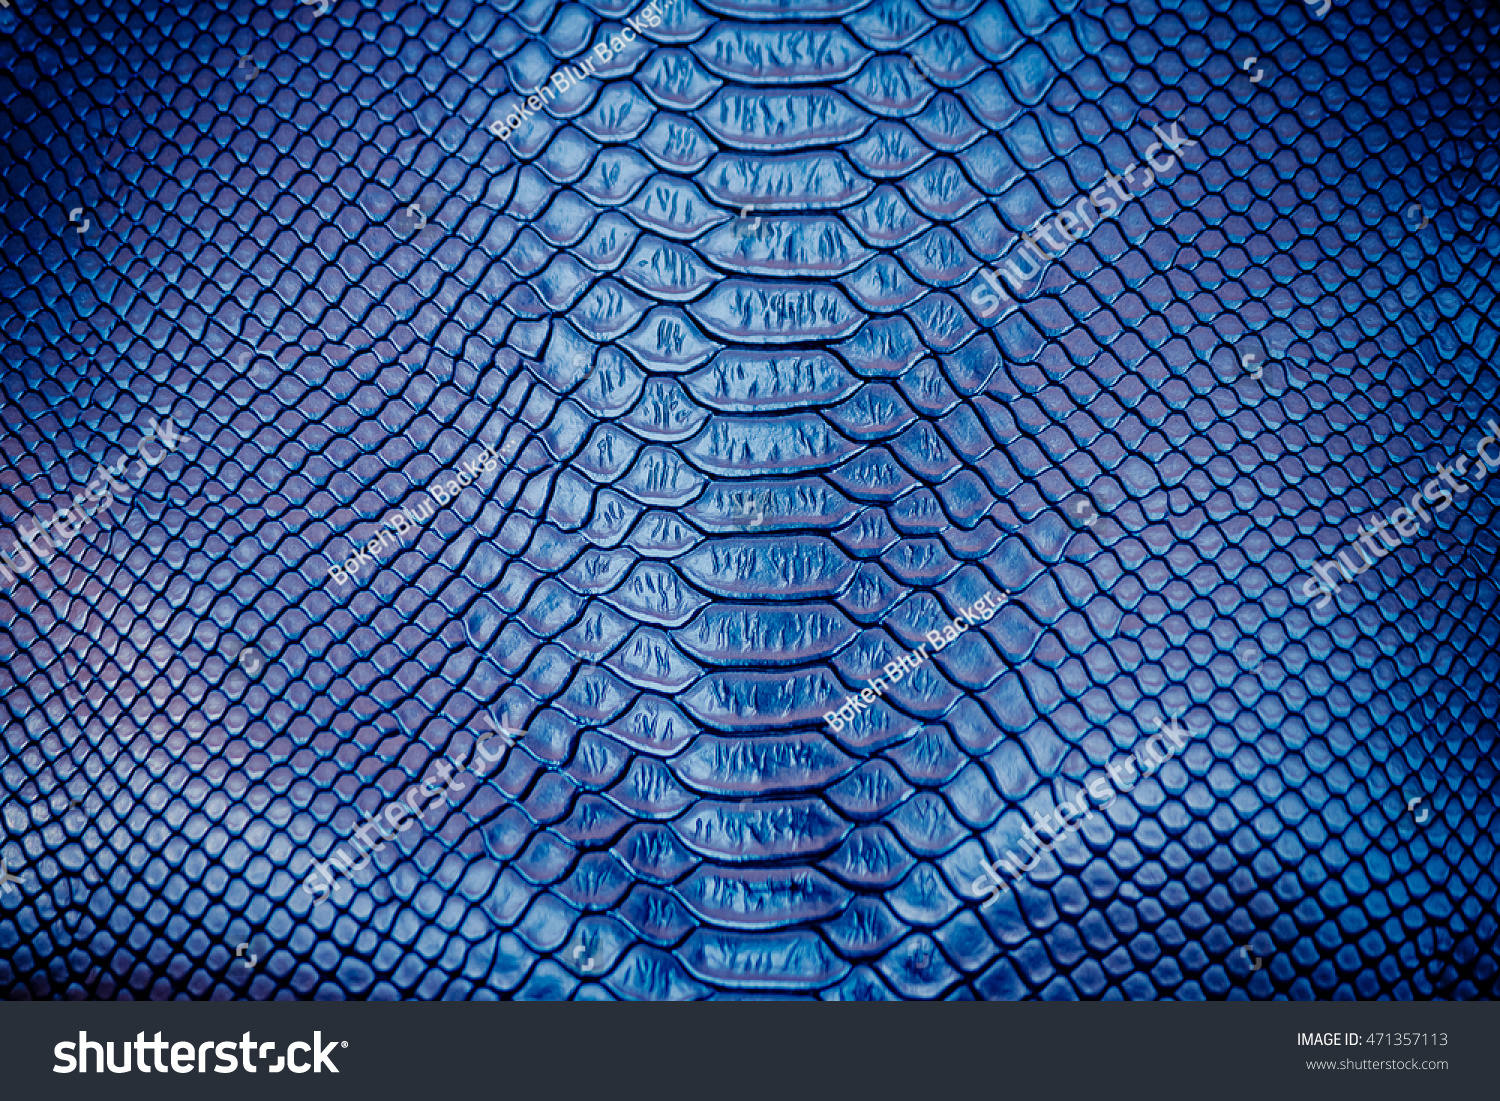 Close Luxury Snake Skin Texture Use Stock Photo 471357113 | Shutterstock